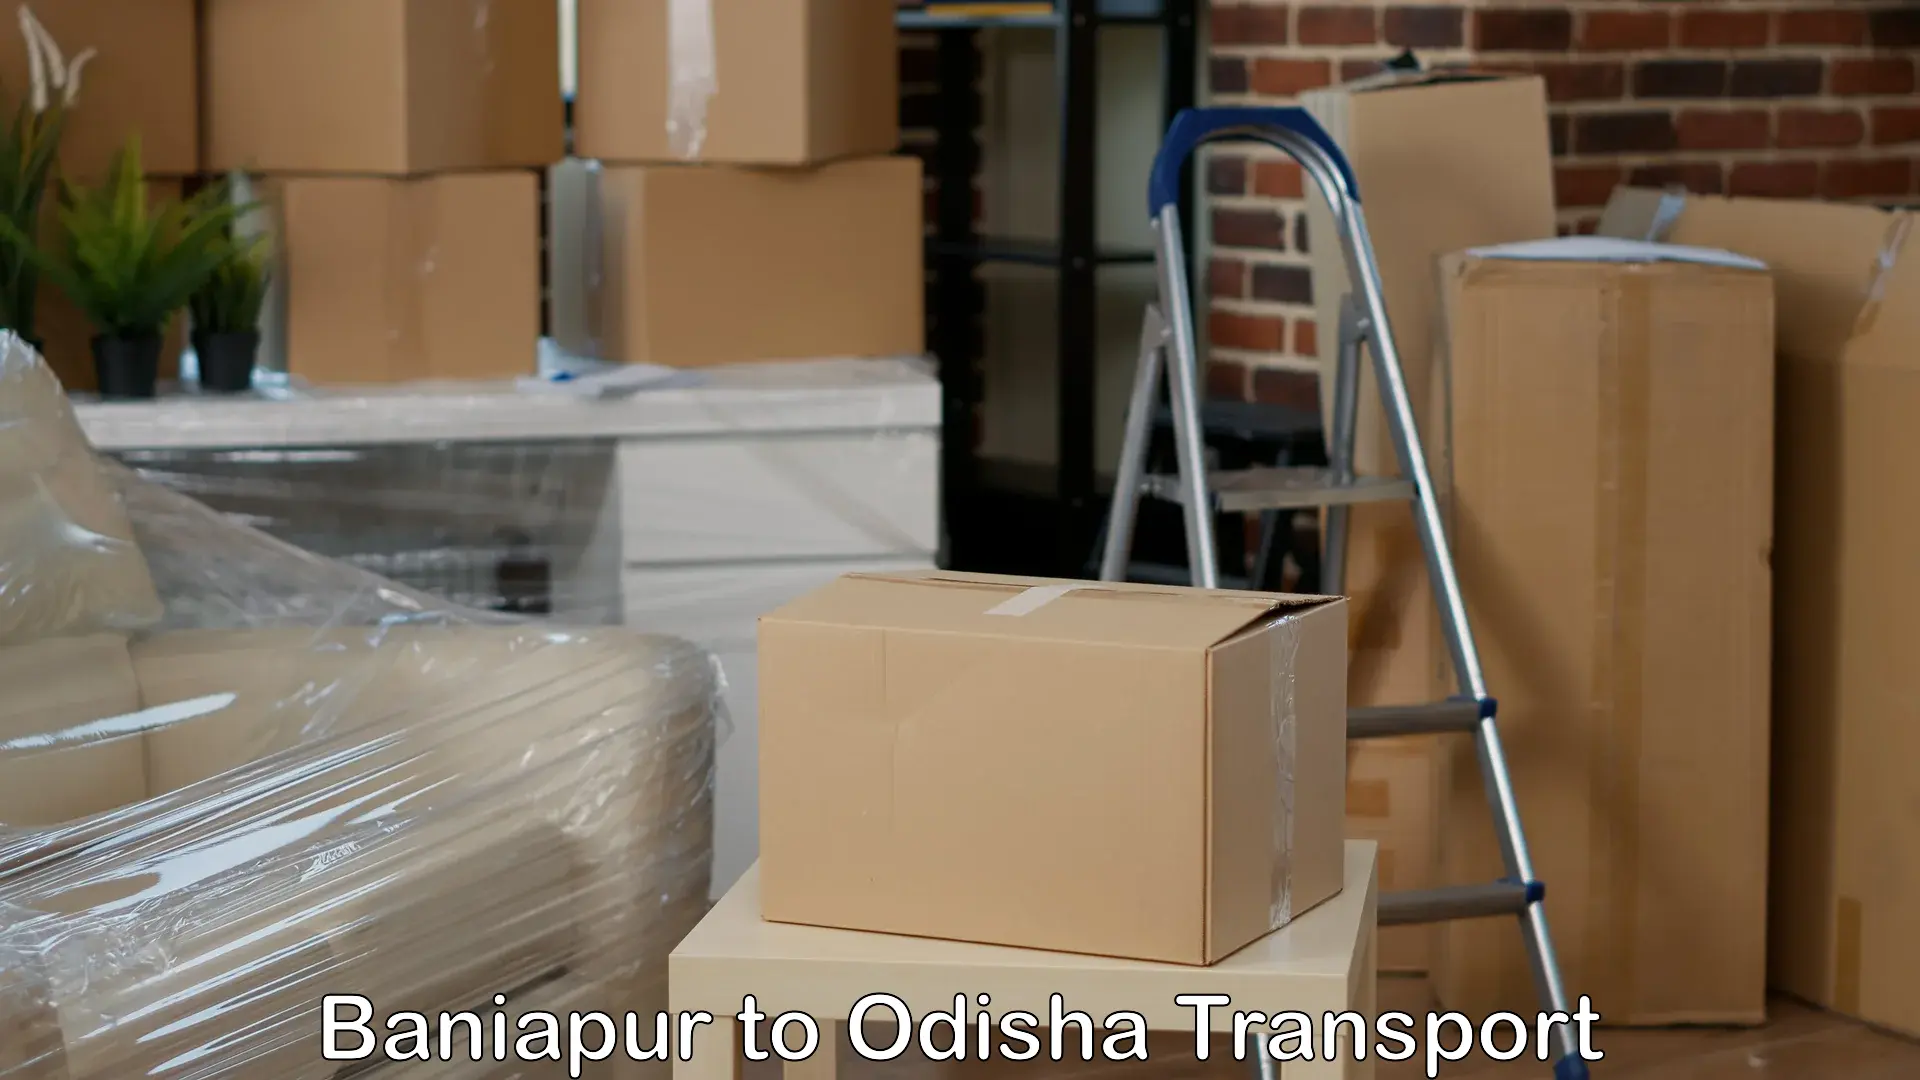 Lorry transport service Baniapur to Bargarh